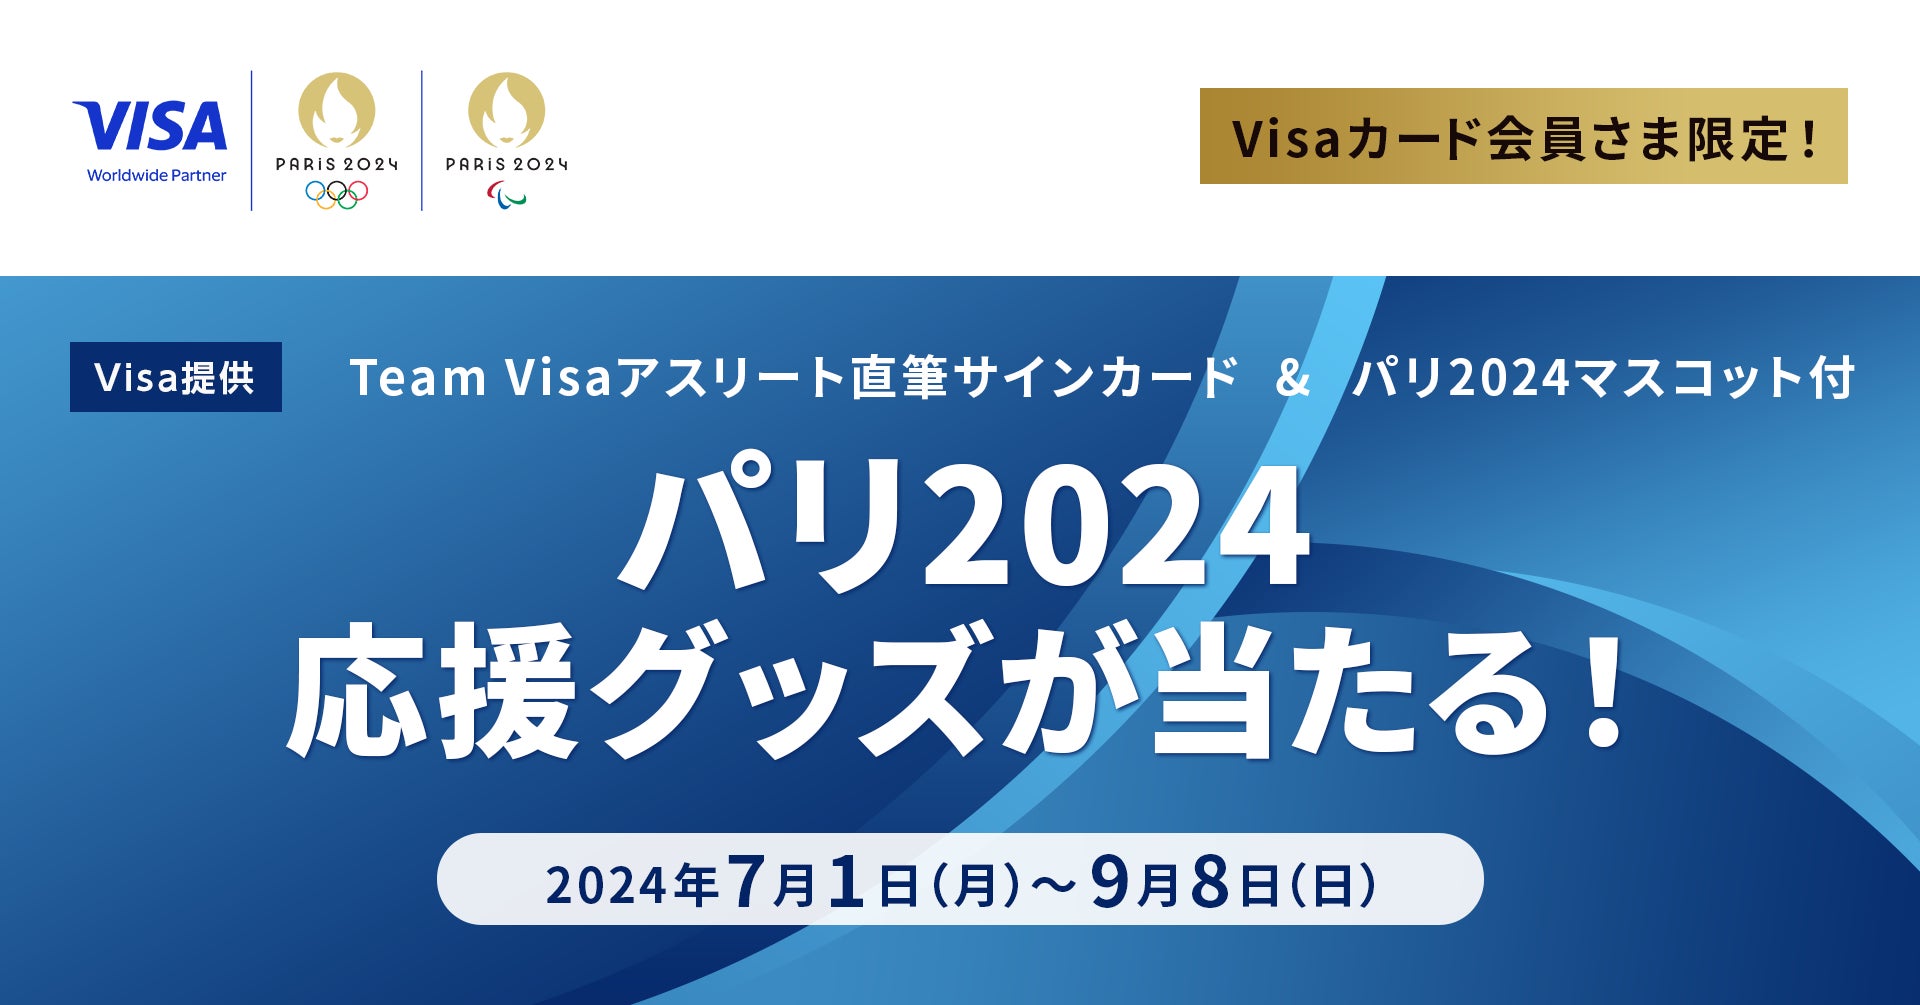 ＜Visa提供＞パリ2024オリンピック・パラリンピック応援グッズが三菱UFJニコスのVisaカード会員に当たるキャンペーン！